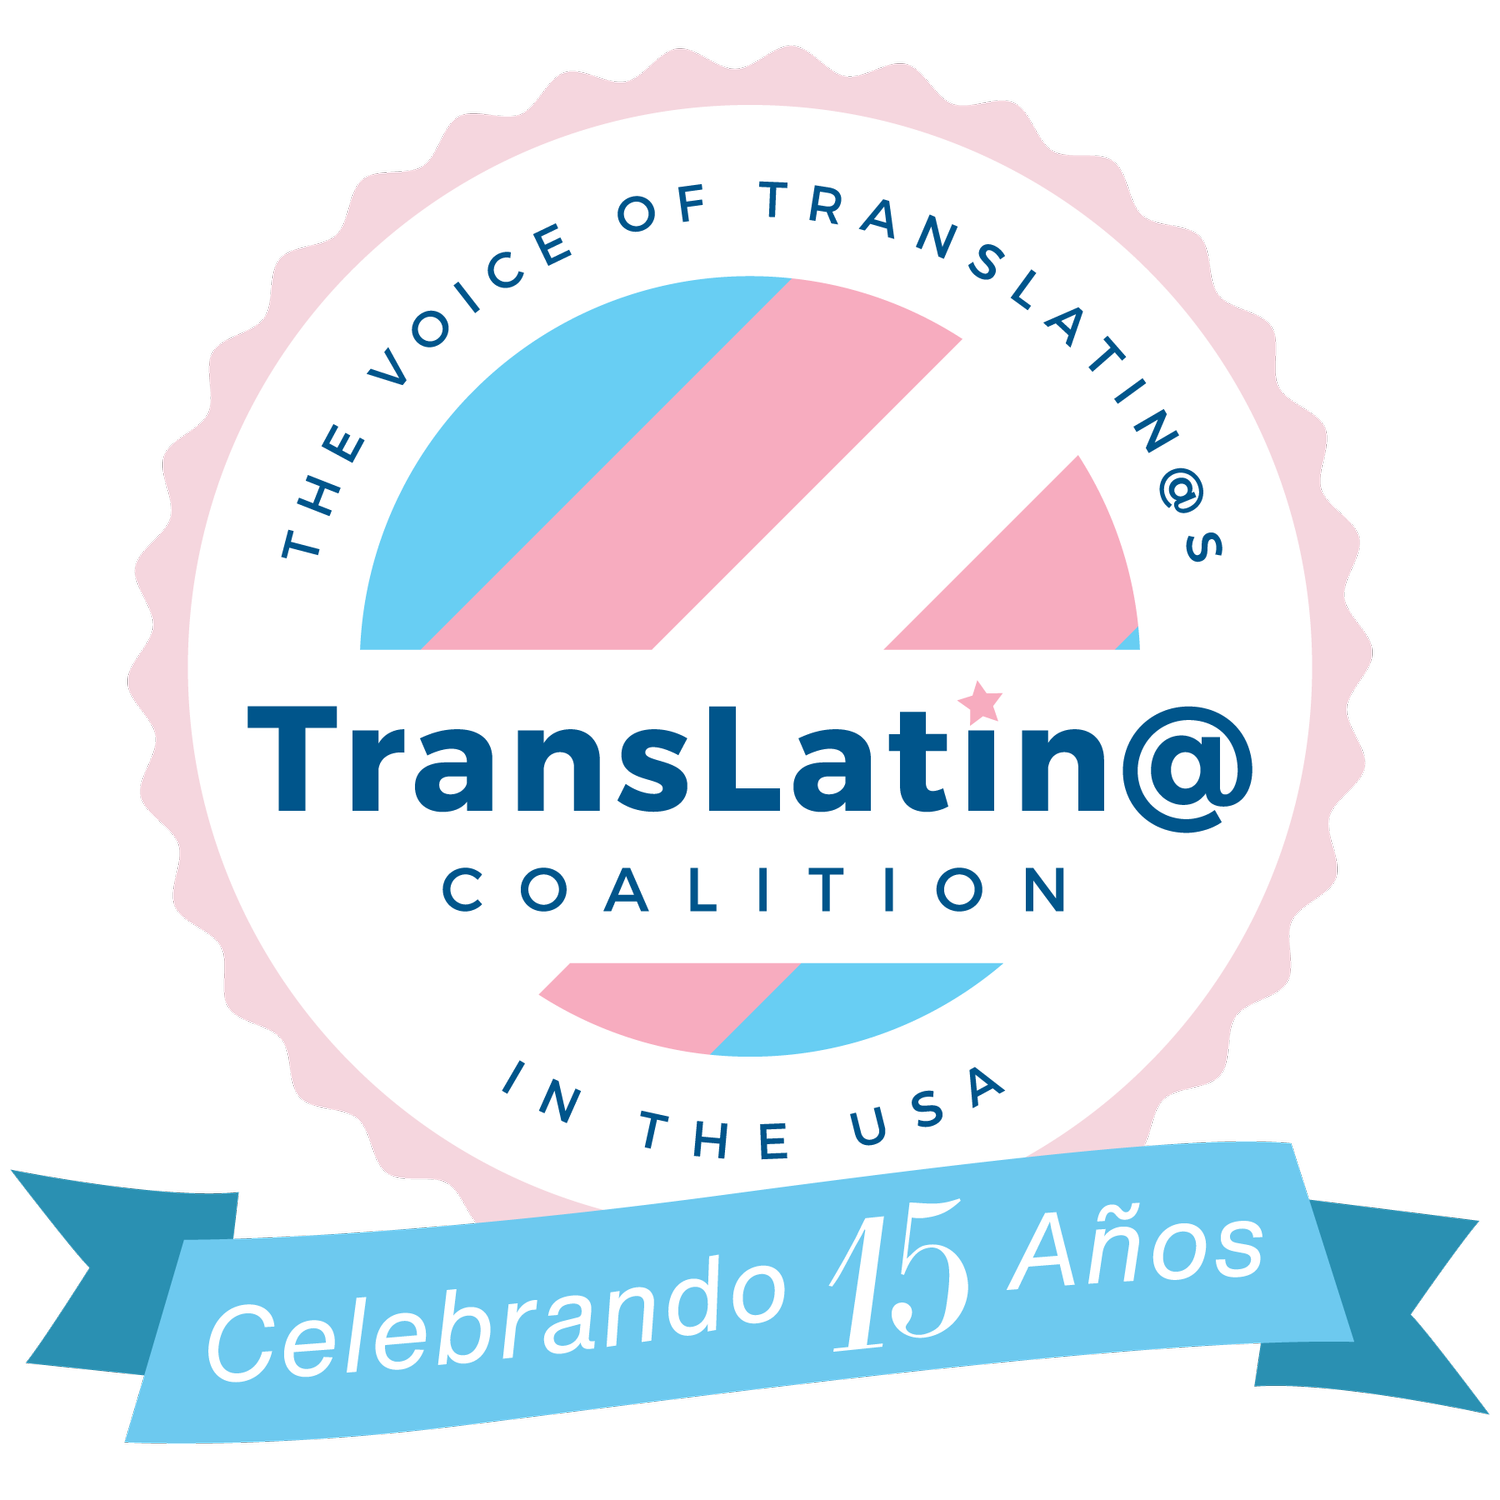 The TransLatin@ Coalition